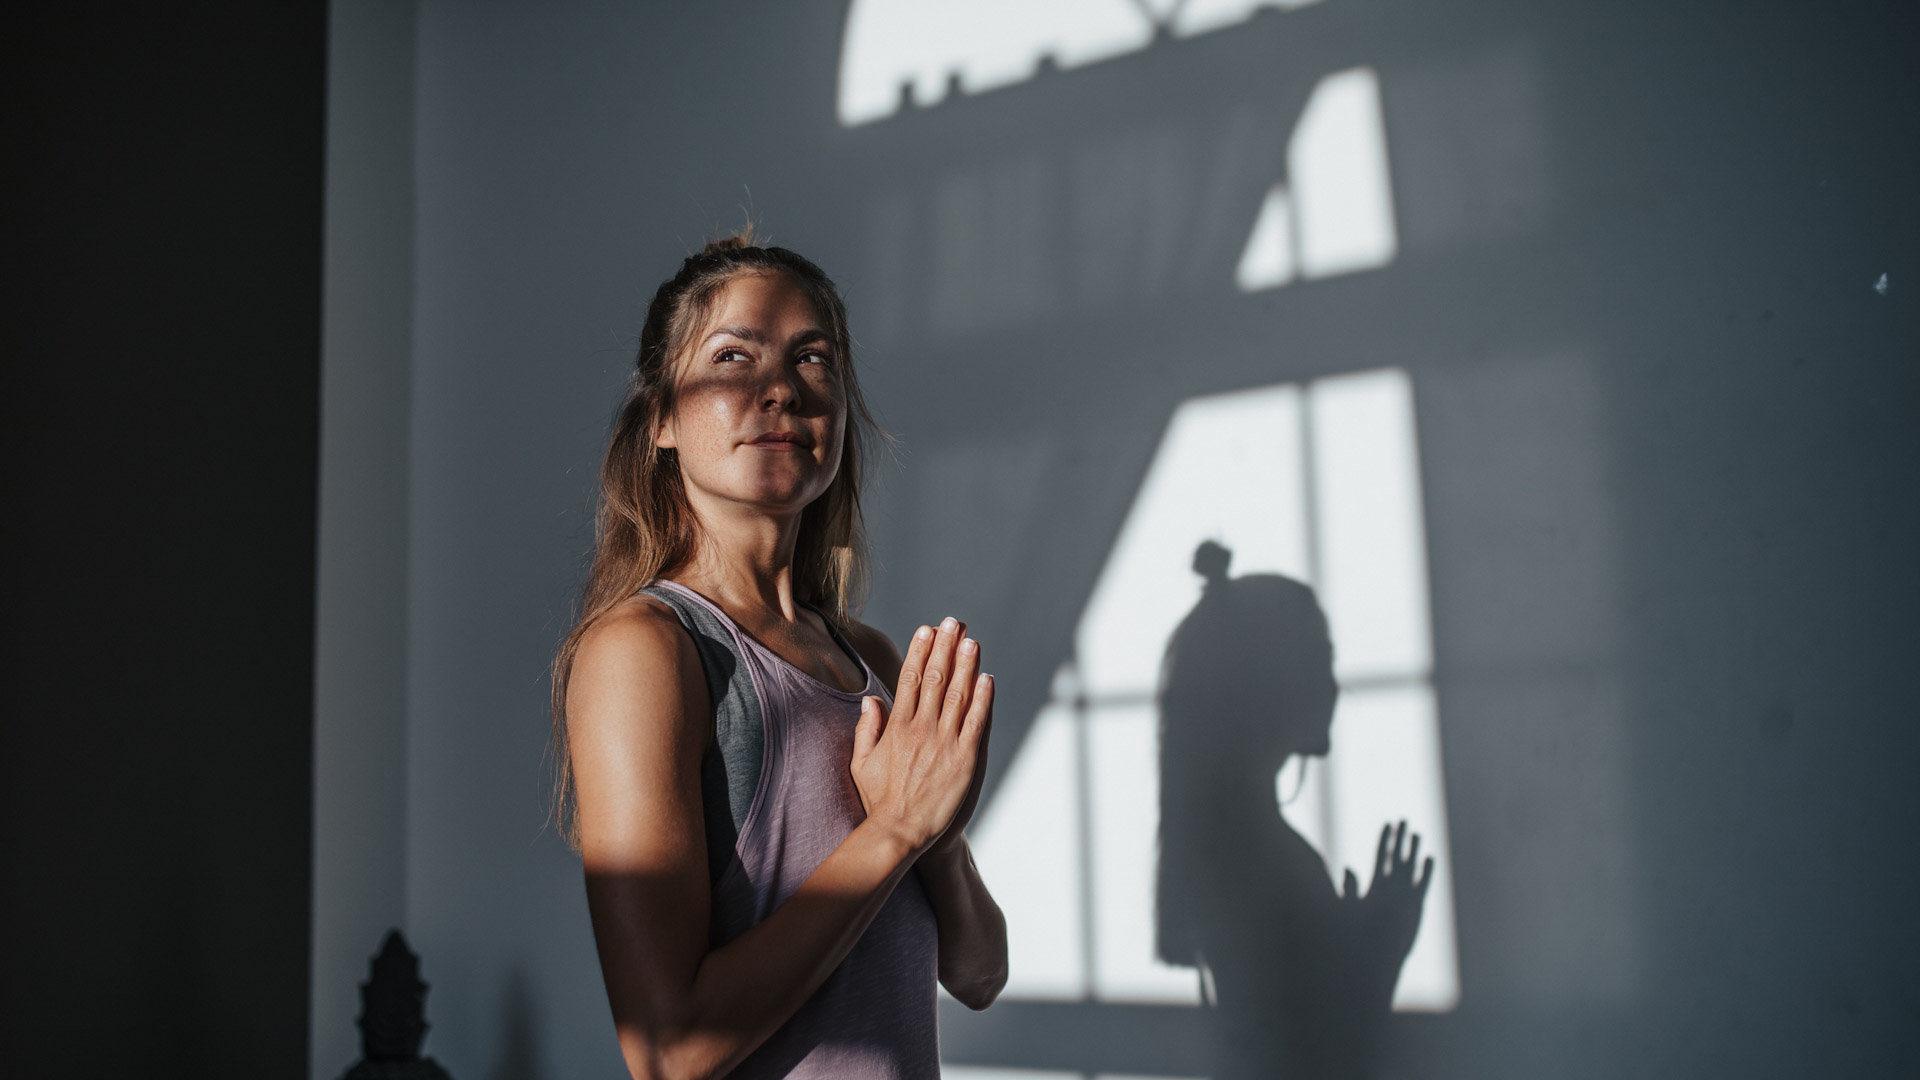 Bergpol Podcast Mana Hamann cama moves yoga personal training yoga brunch